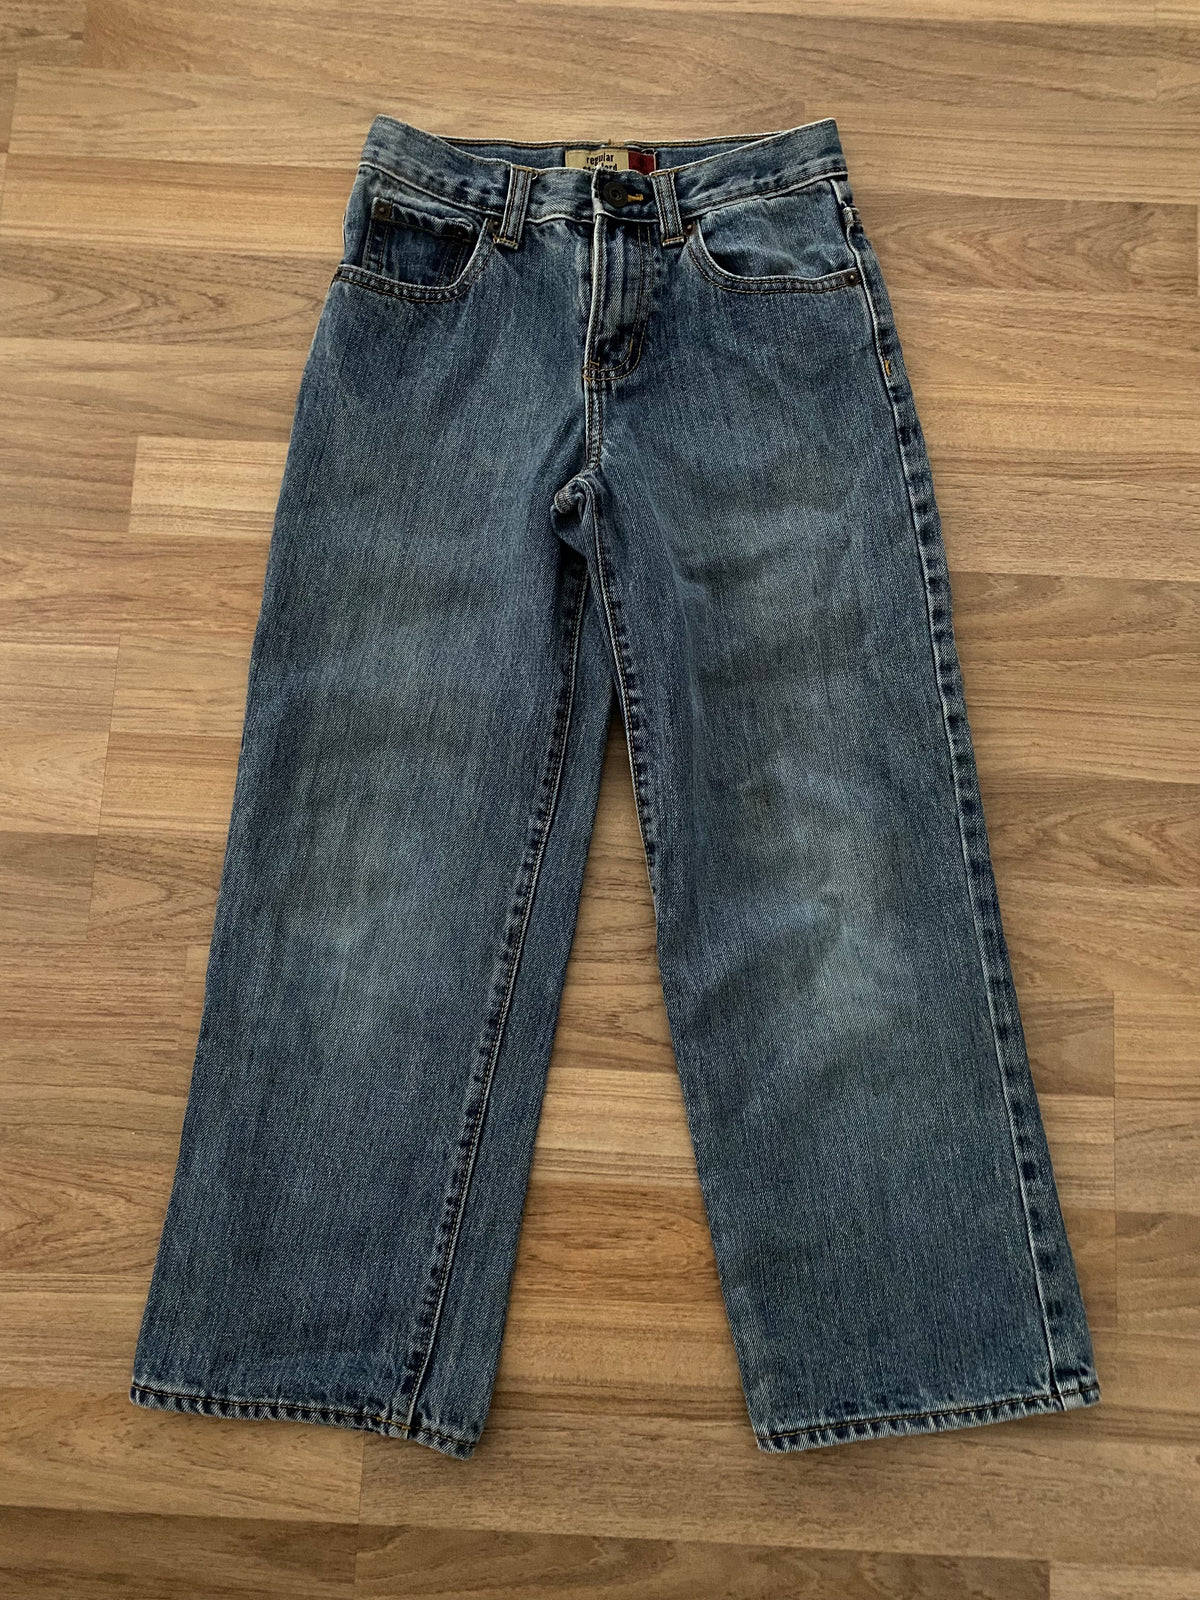 Jeans (Boys Size 8)